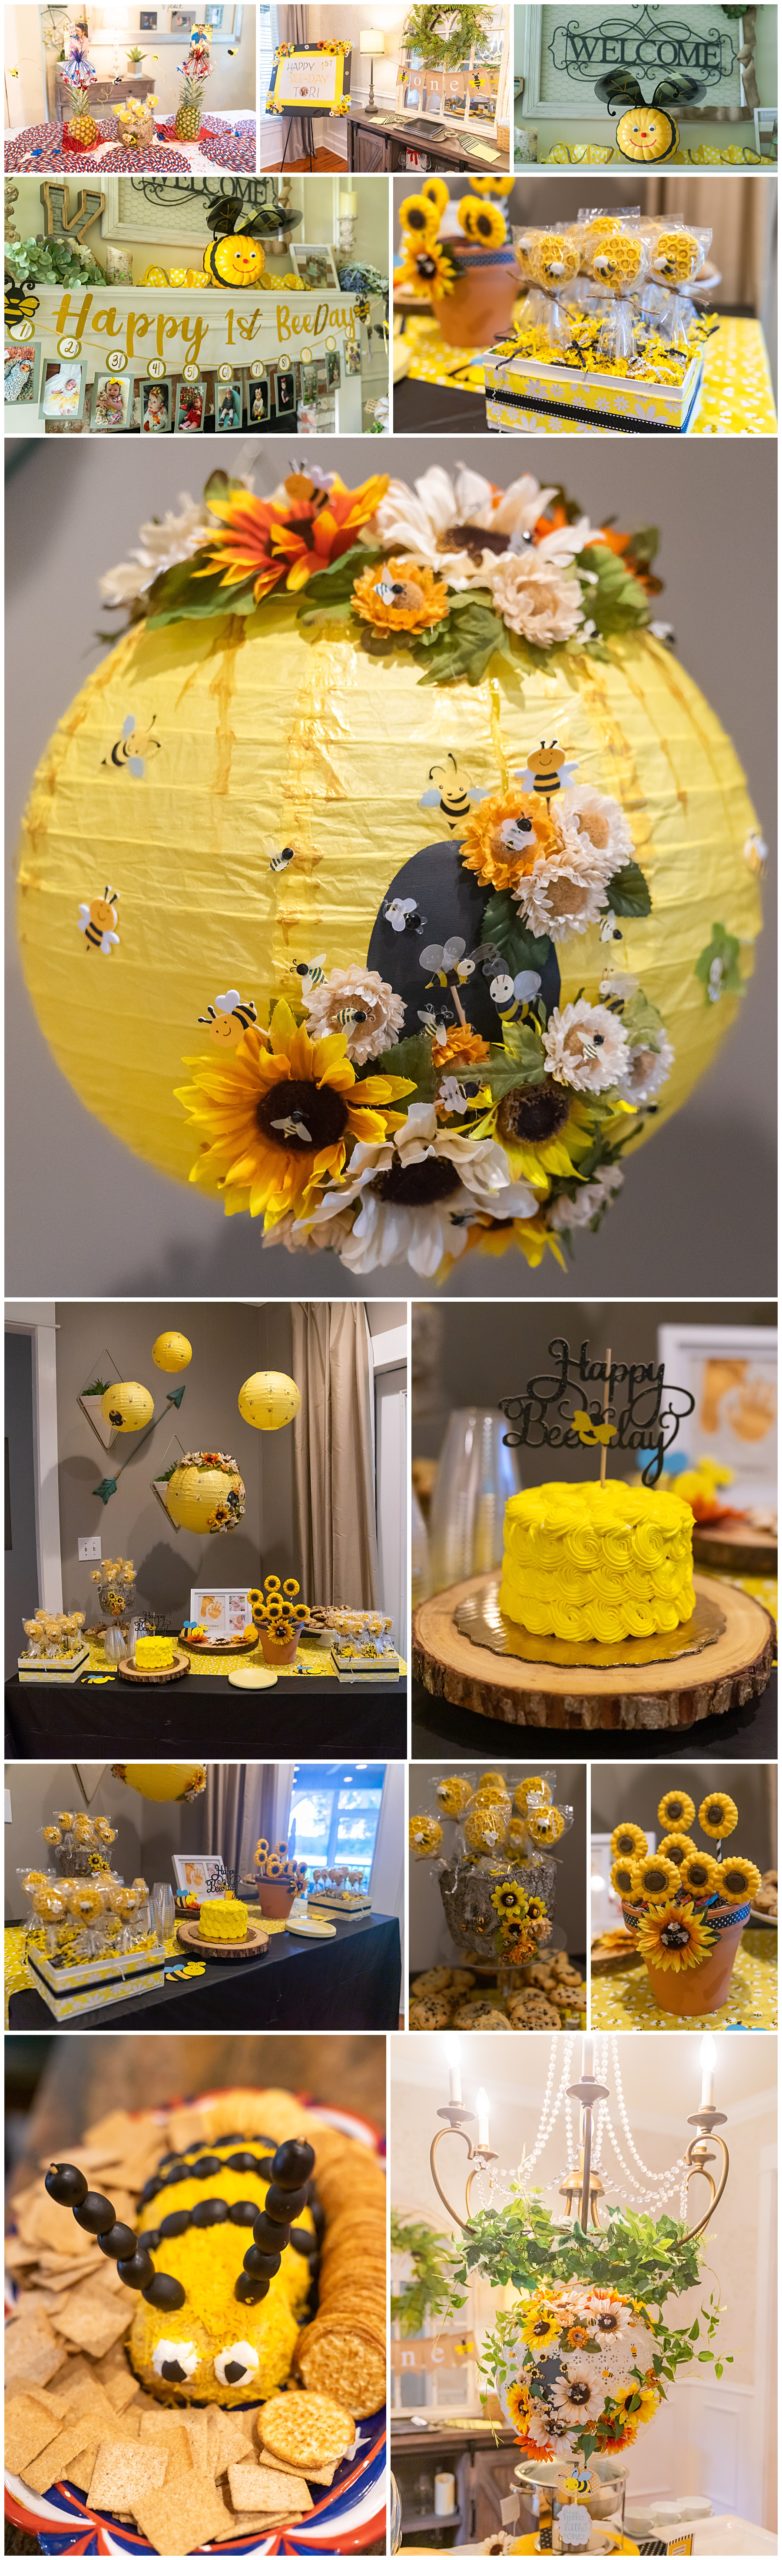 Bee theme birthday decorations